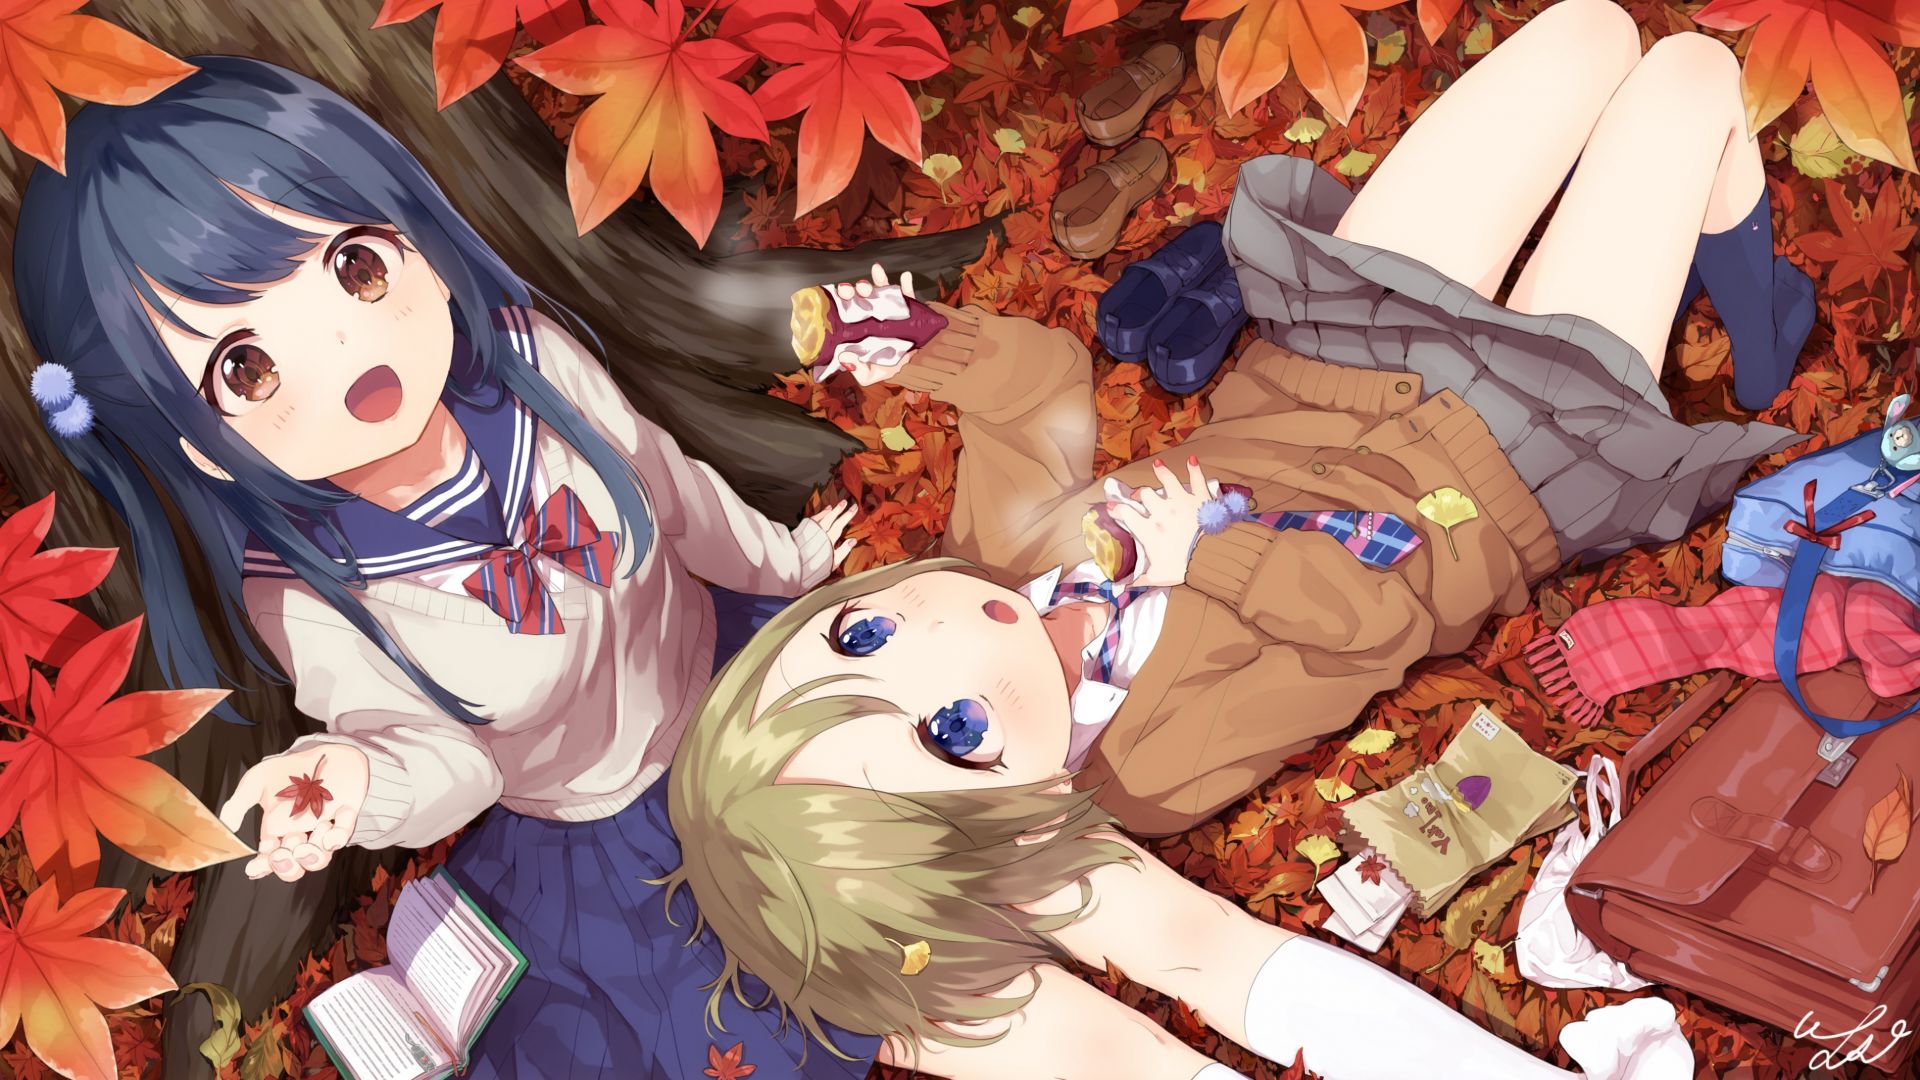 Autumn Anime Scenerywallpaper1024x768 by TheRisingStar2 on DeviantArt